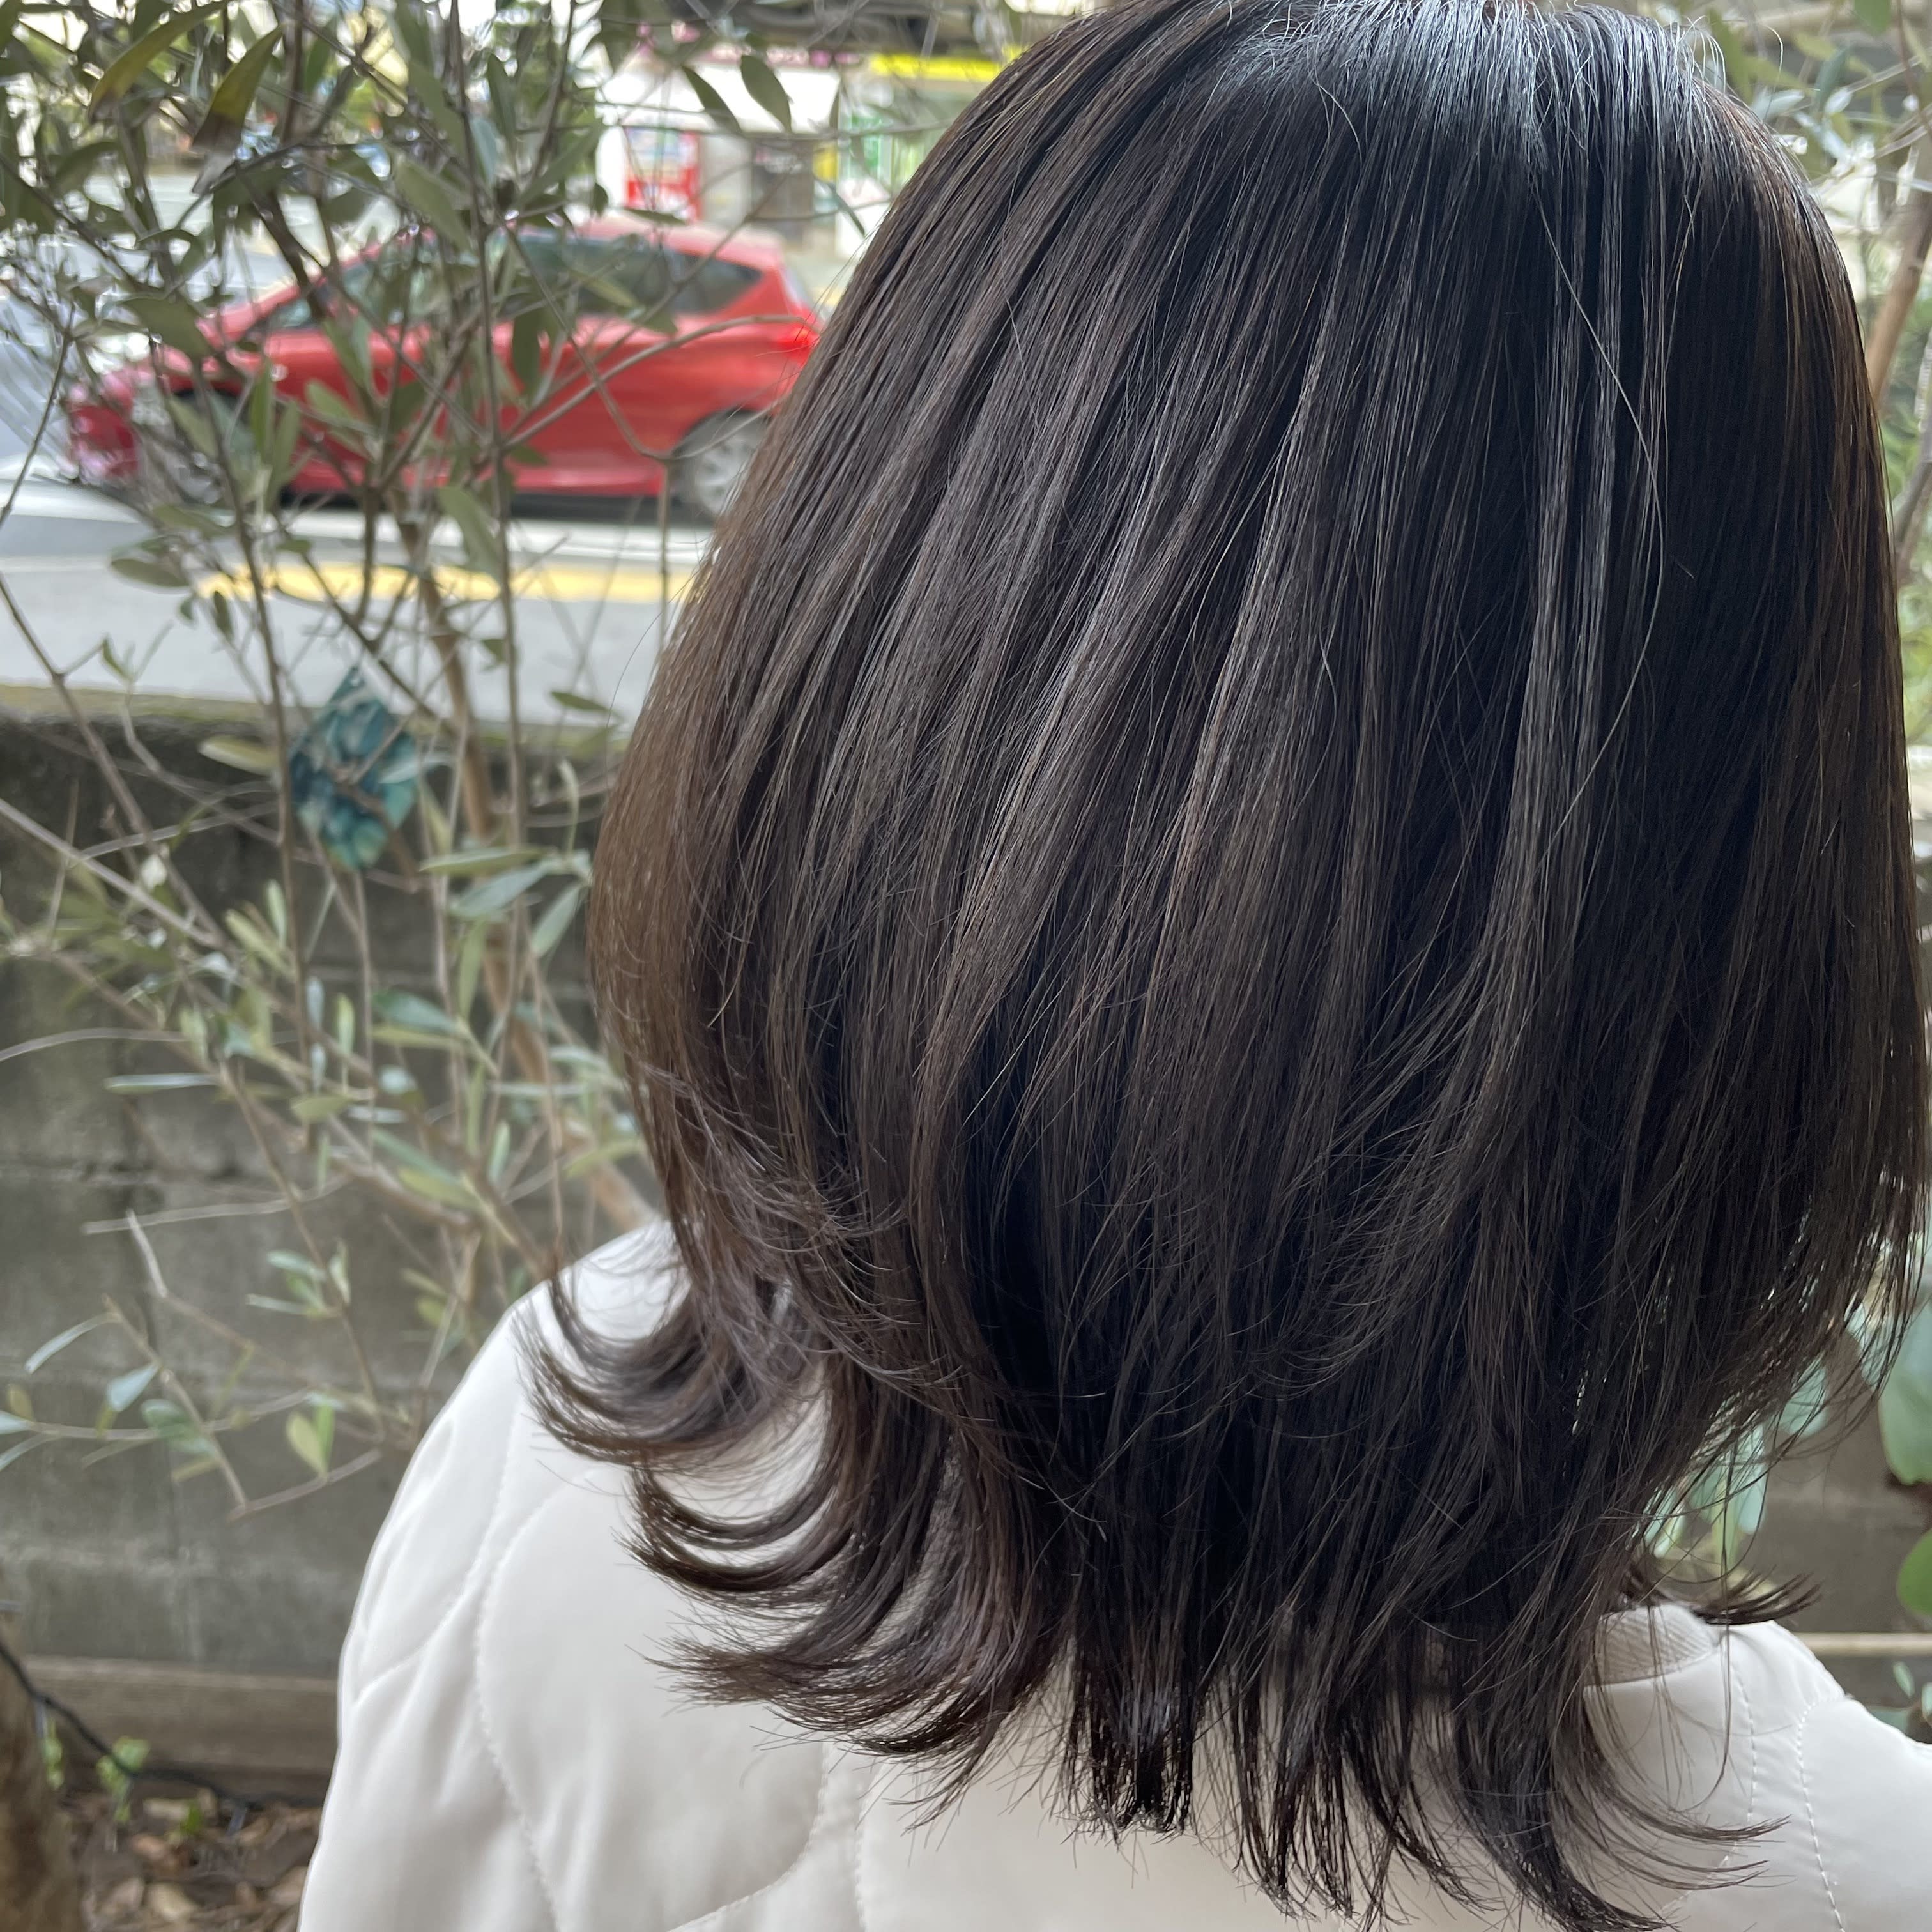 AOZORA HAIR FUJISAKIGU【アオゾラヘアーフジサキグウ】のスタイル紹介。くびれヘア